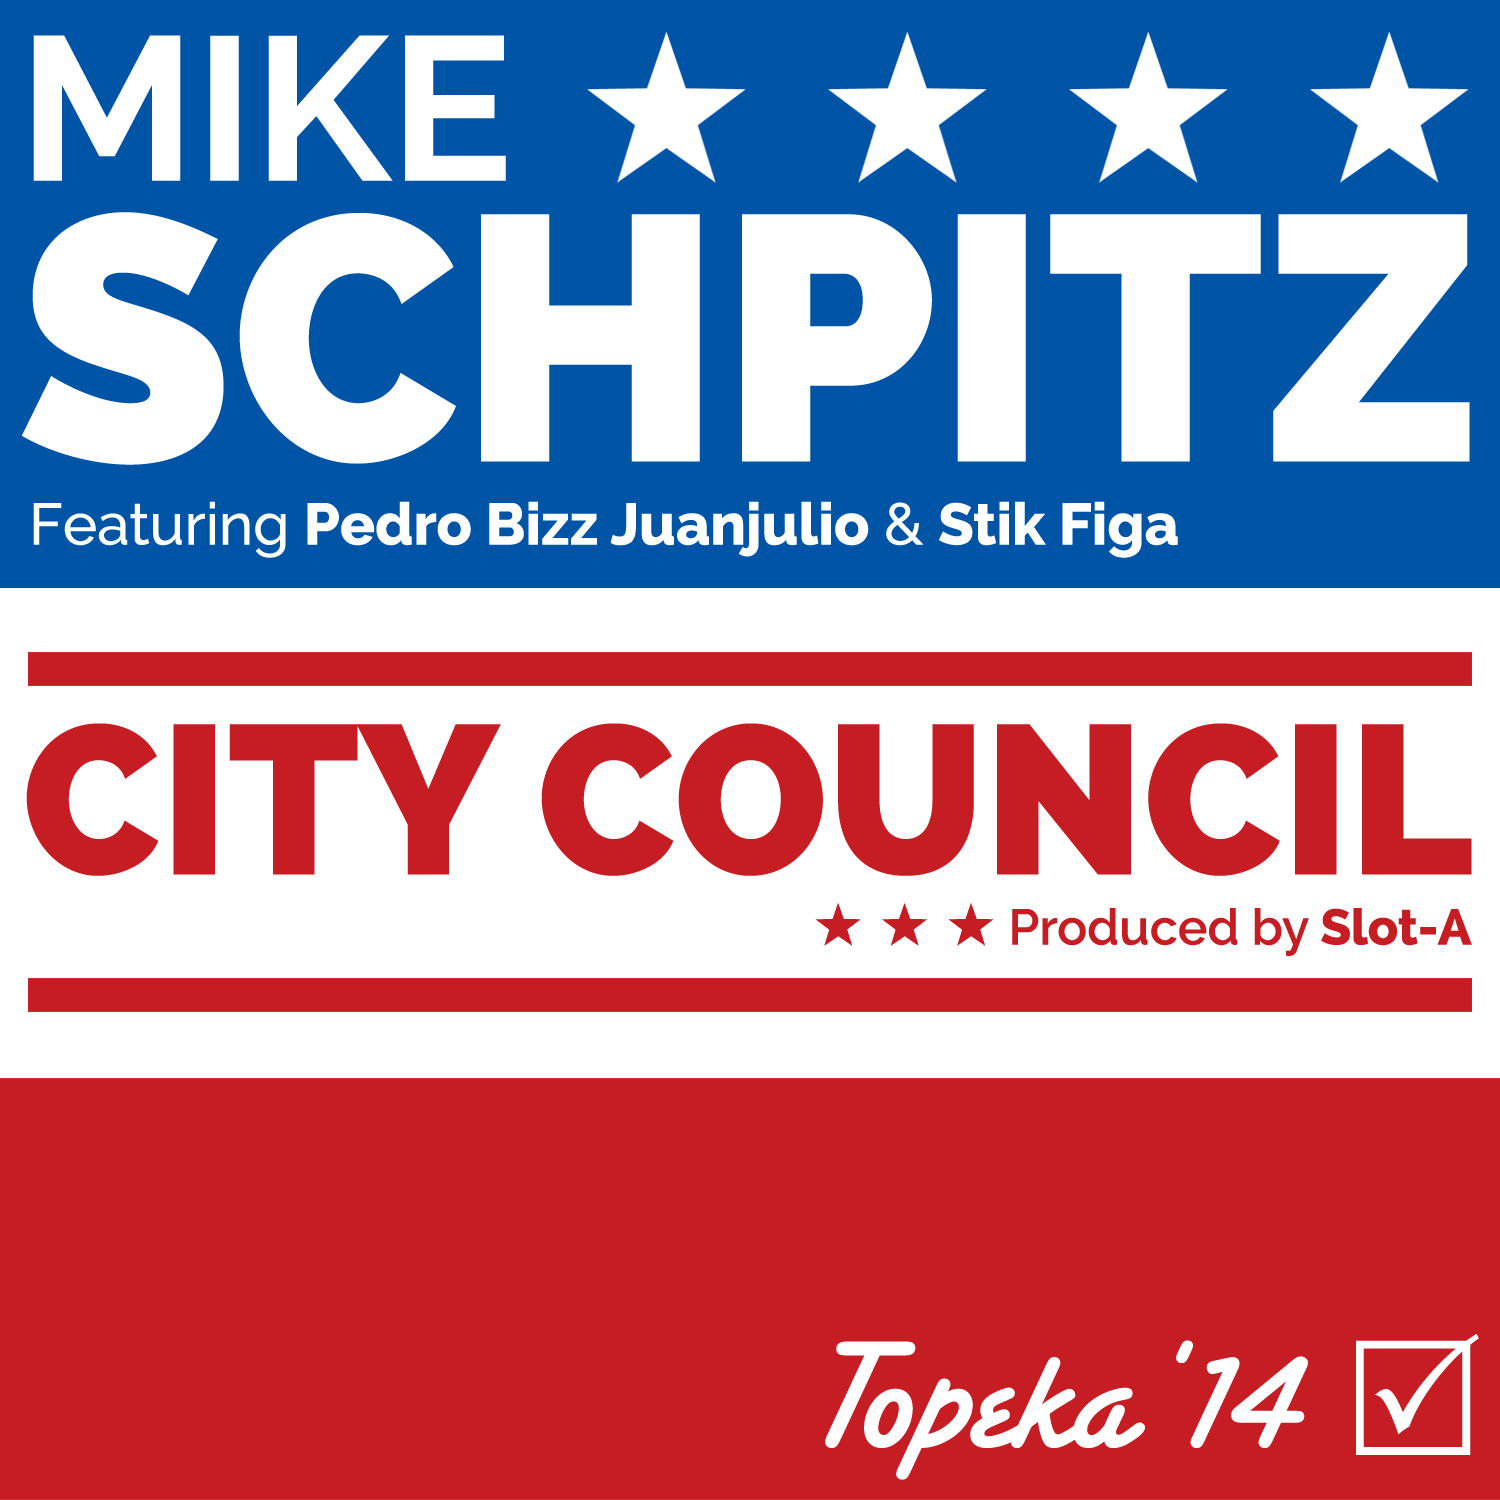 #KANSAS: Mike Schpitz ft. Stik Figa & Pedro Bizz Juanjulio "City Council" | @MikeSchpitz @Stik_Figa @BizzyMr785